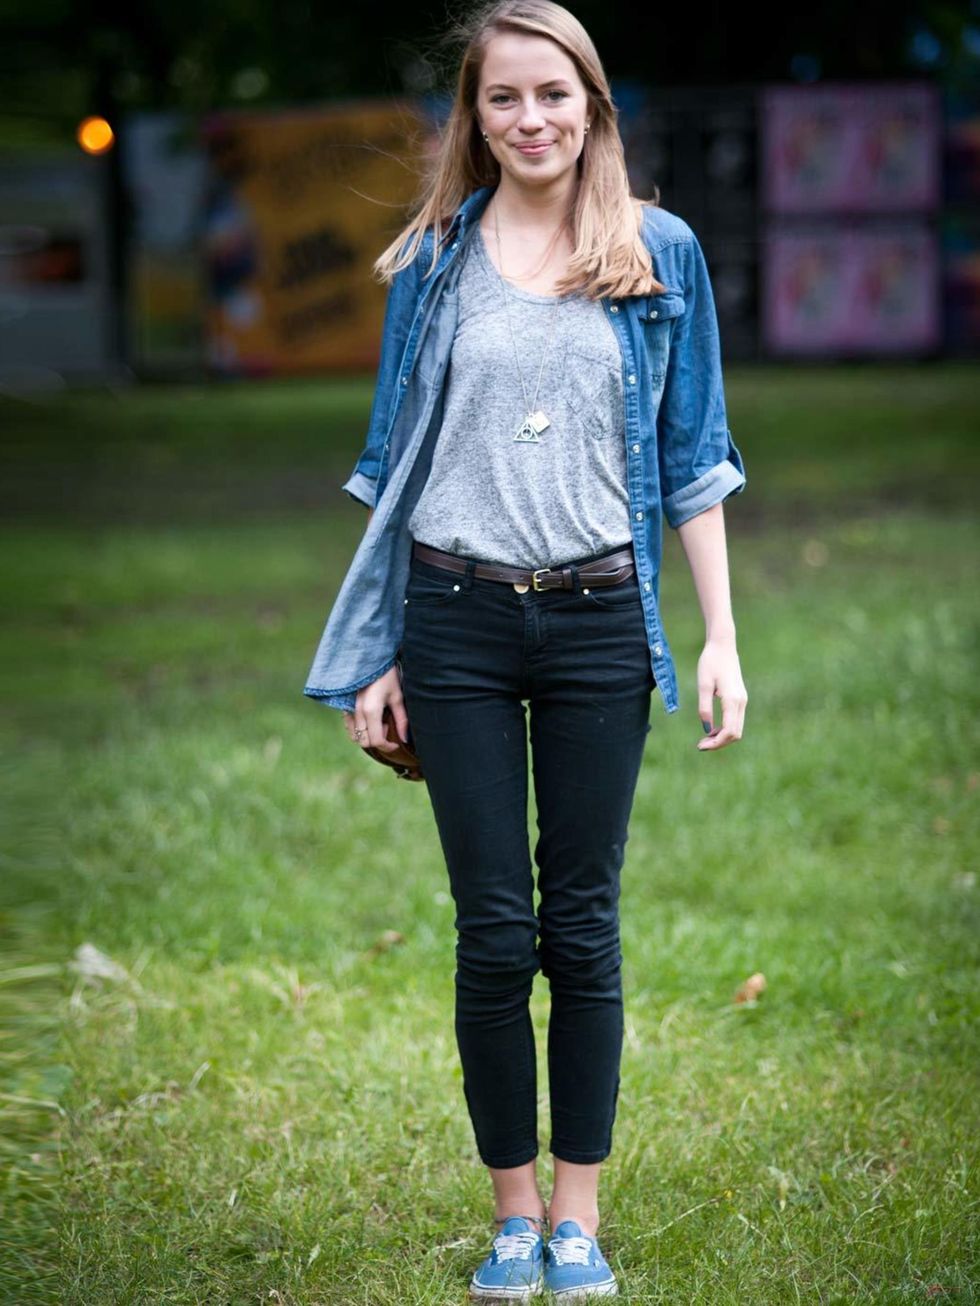 <p>Lyclia Powell, 19, Student. Primark shirt, Next top, Zara jeans, Vans shoes.</p><p>Photo by Stephanie Sian Smith</p>